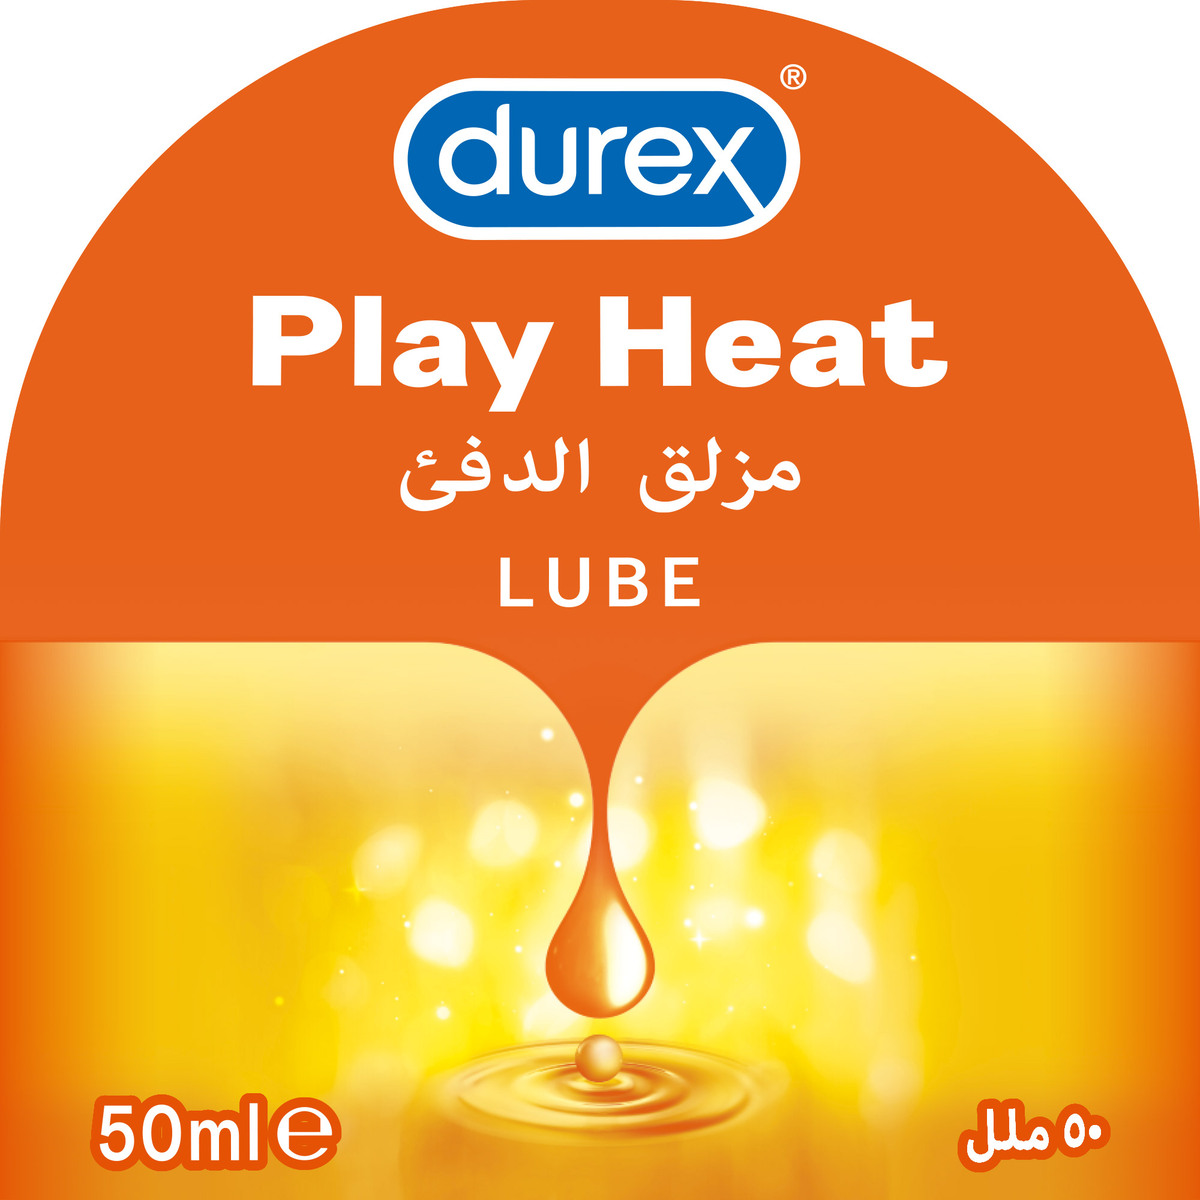 Durex Play Heat Lube Gel 50ml